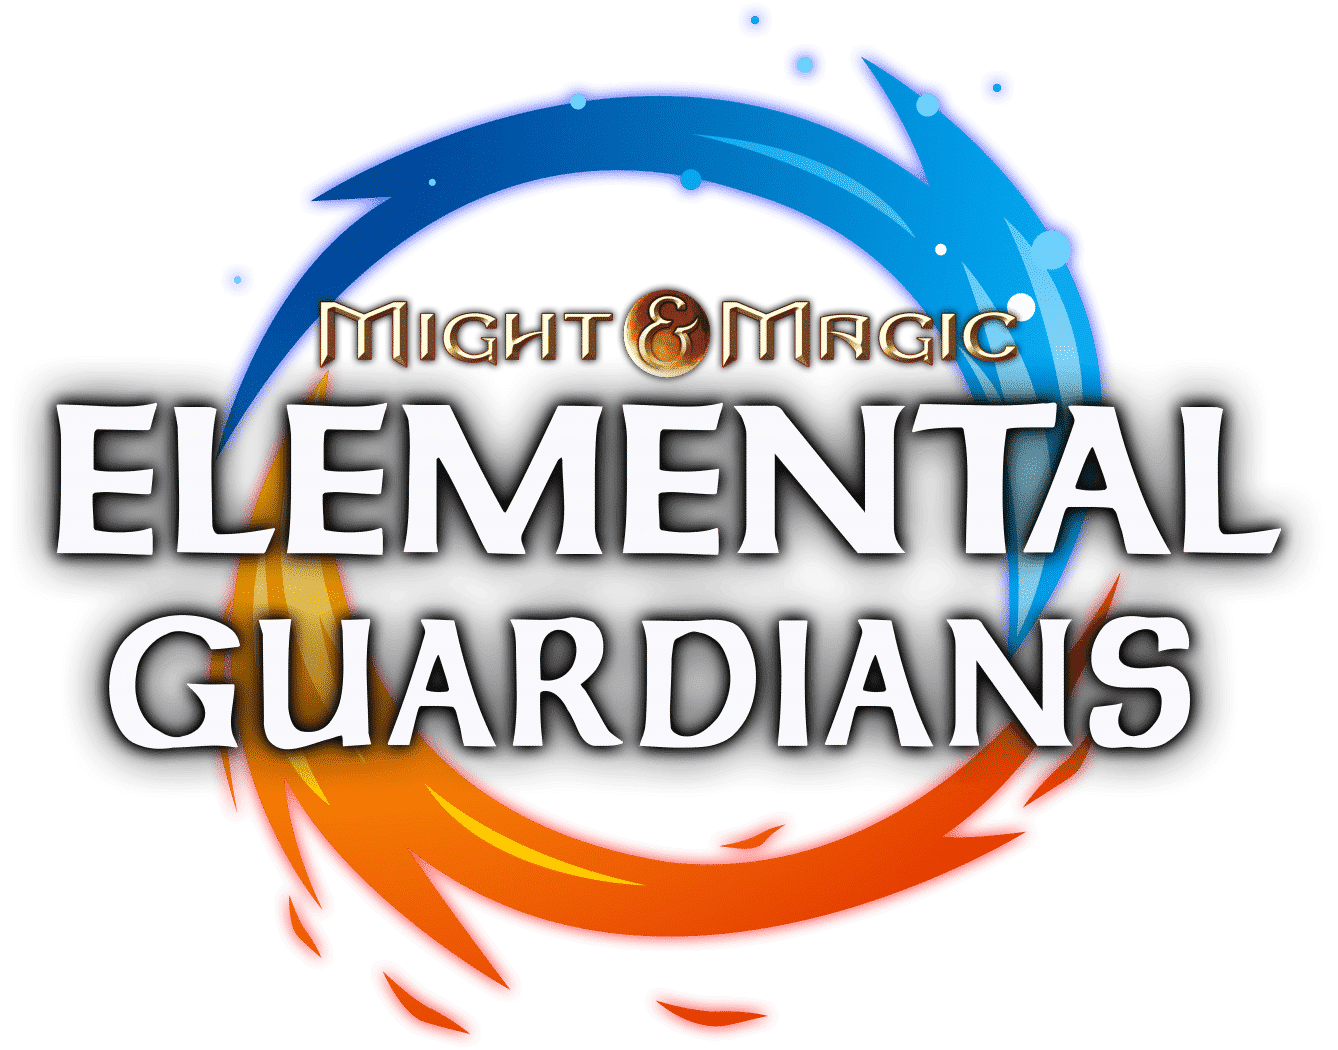 Might & Magic Elemental Guardians Logo